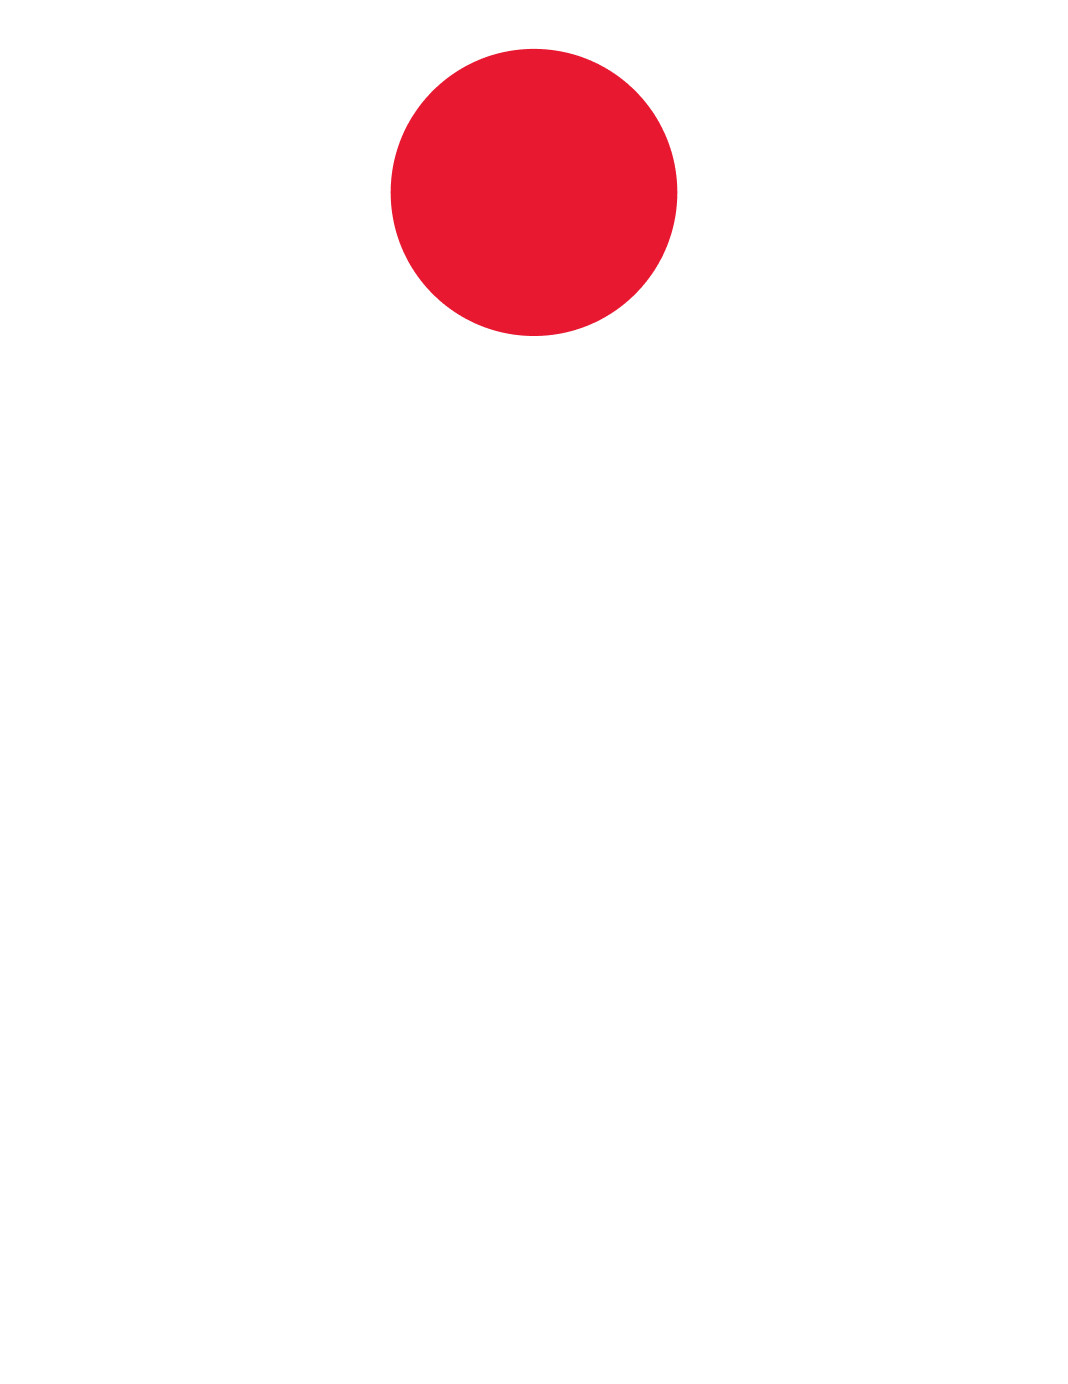 JKA SC Logo Vertical - Branca